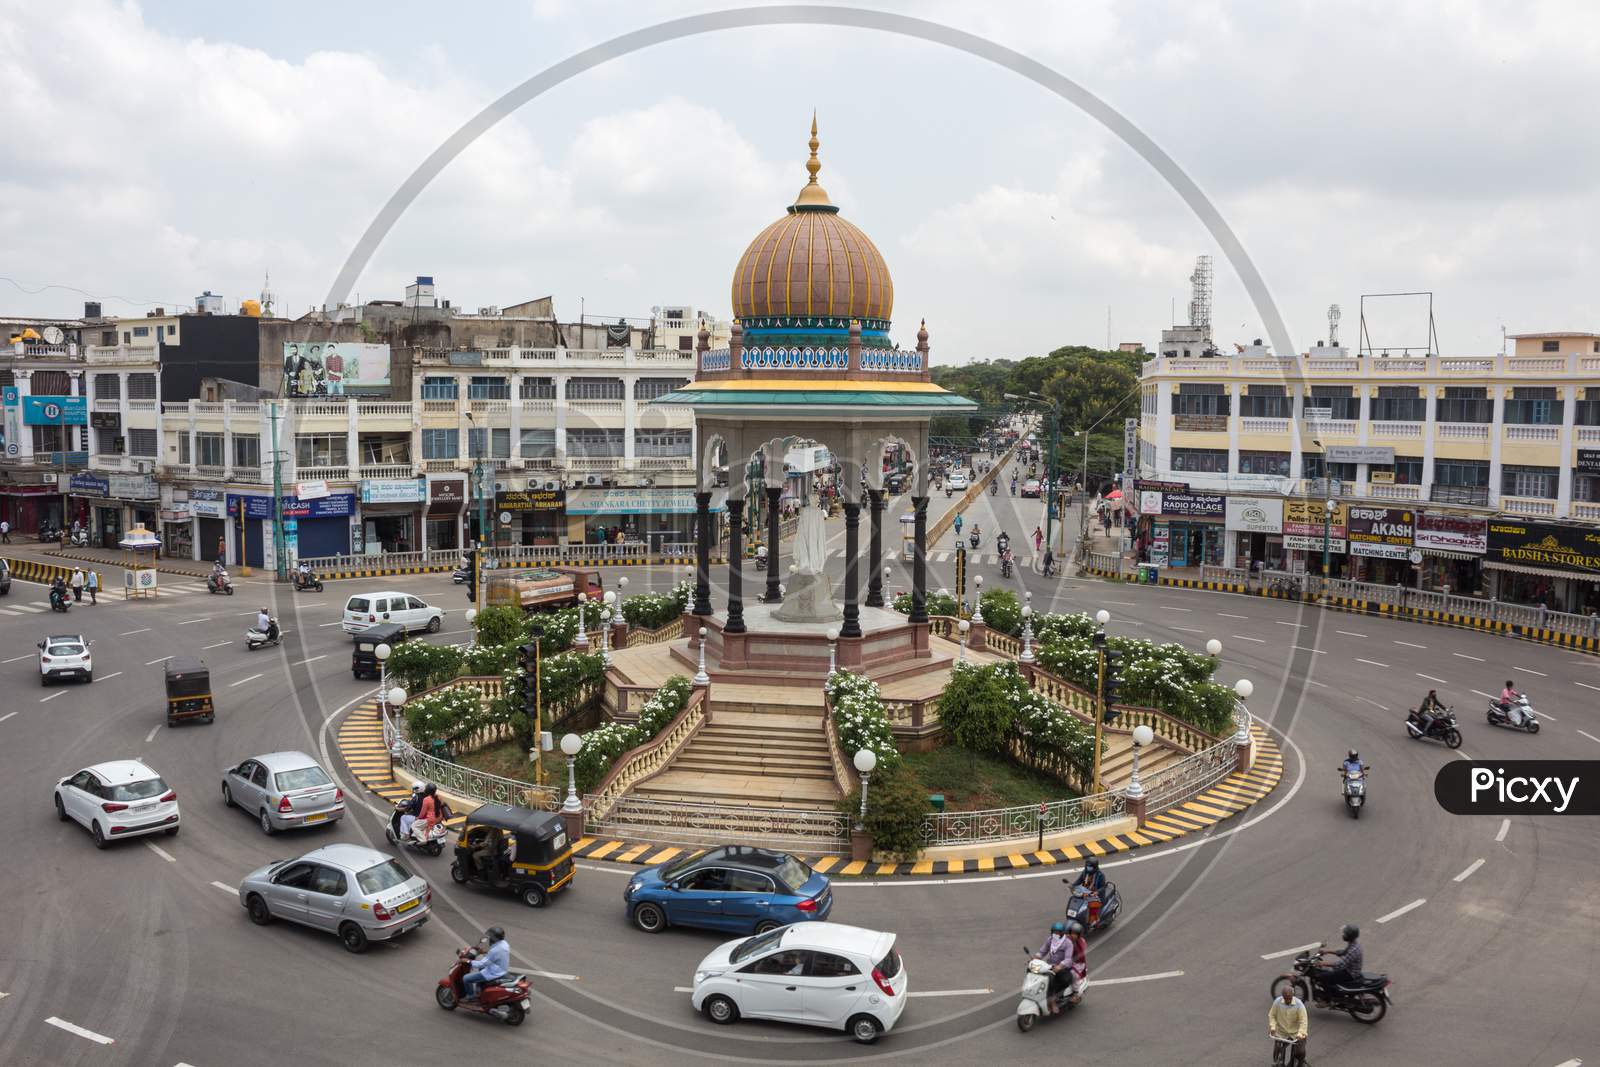 Krishnaraja wodeyar circle in Mysore /Karnataka/India.